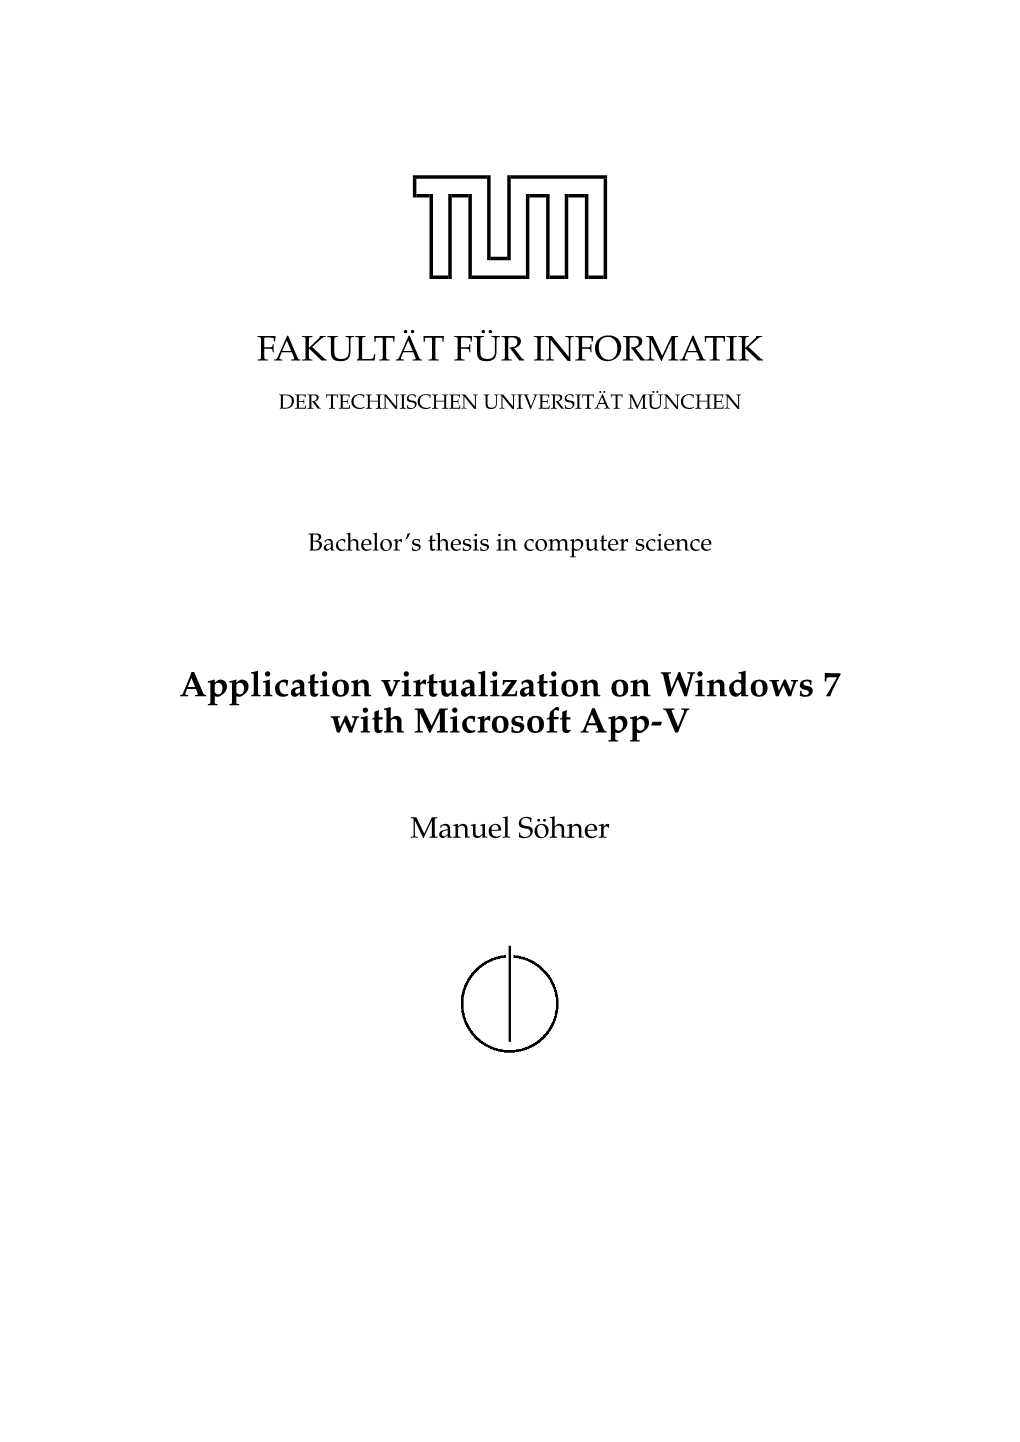 Application Virtualization on Windows 7 with Microsoft App-V